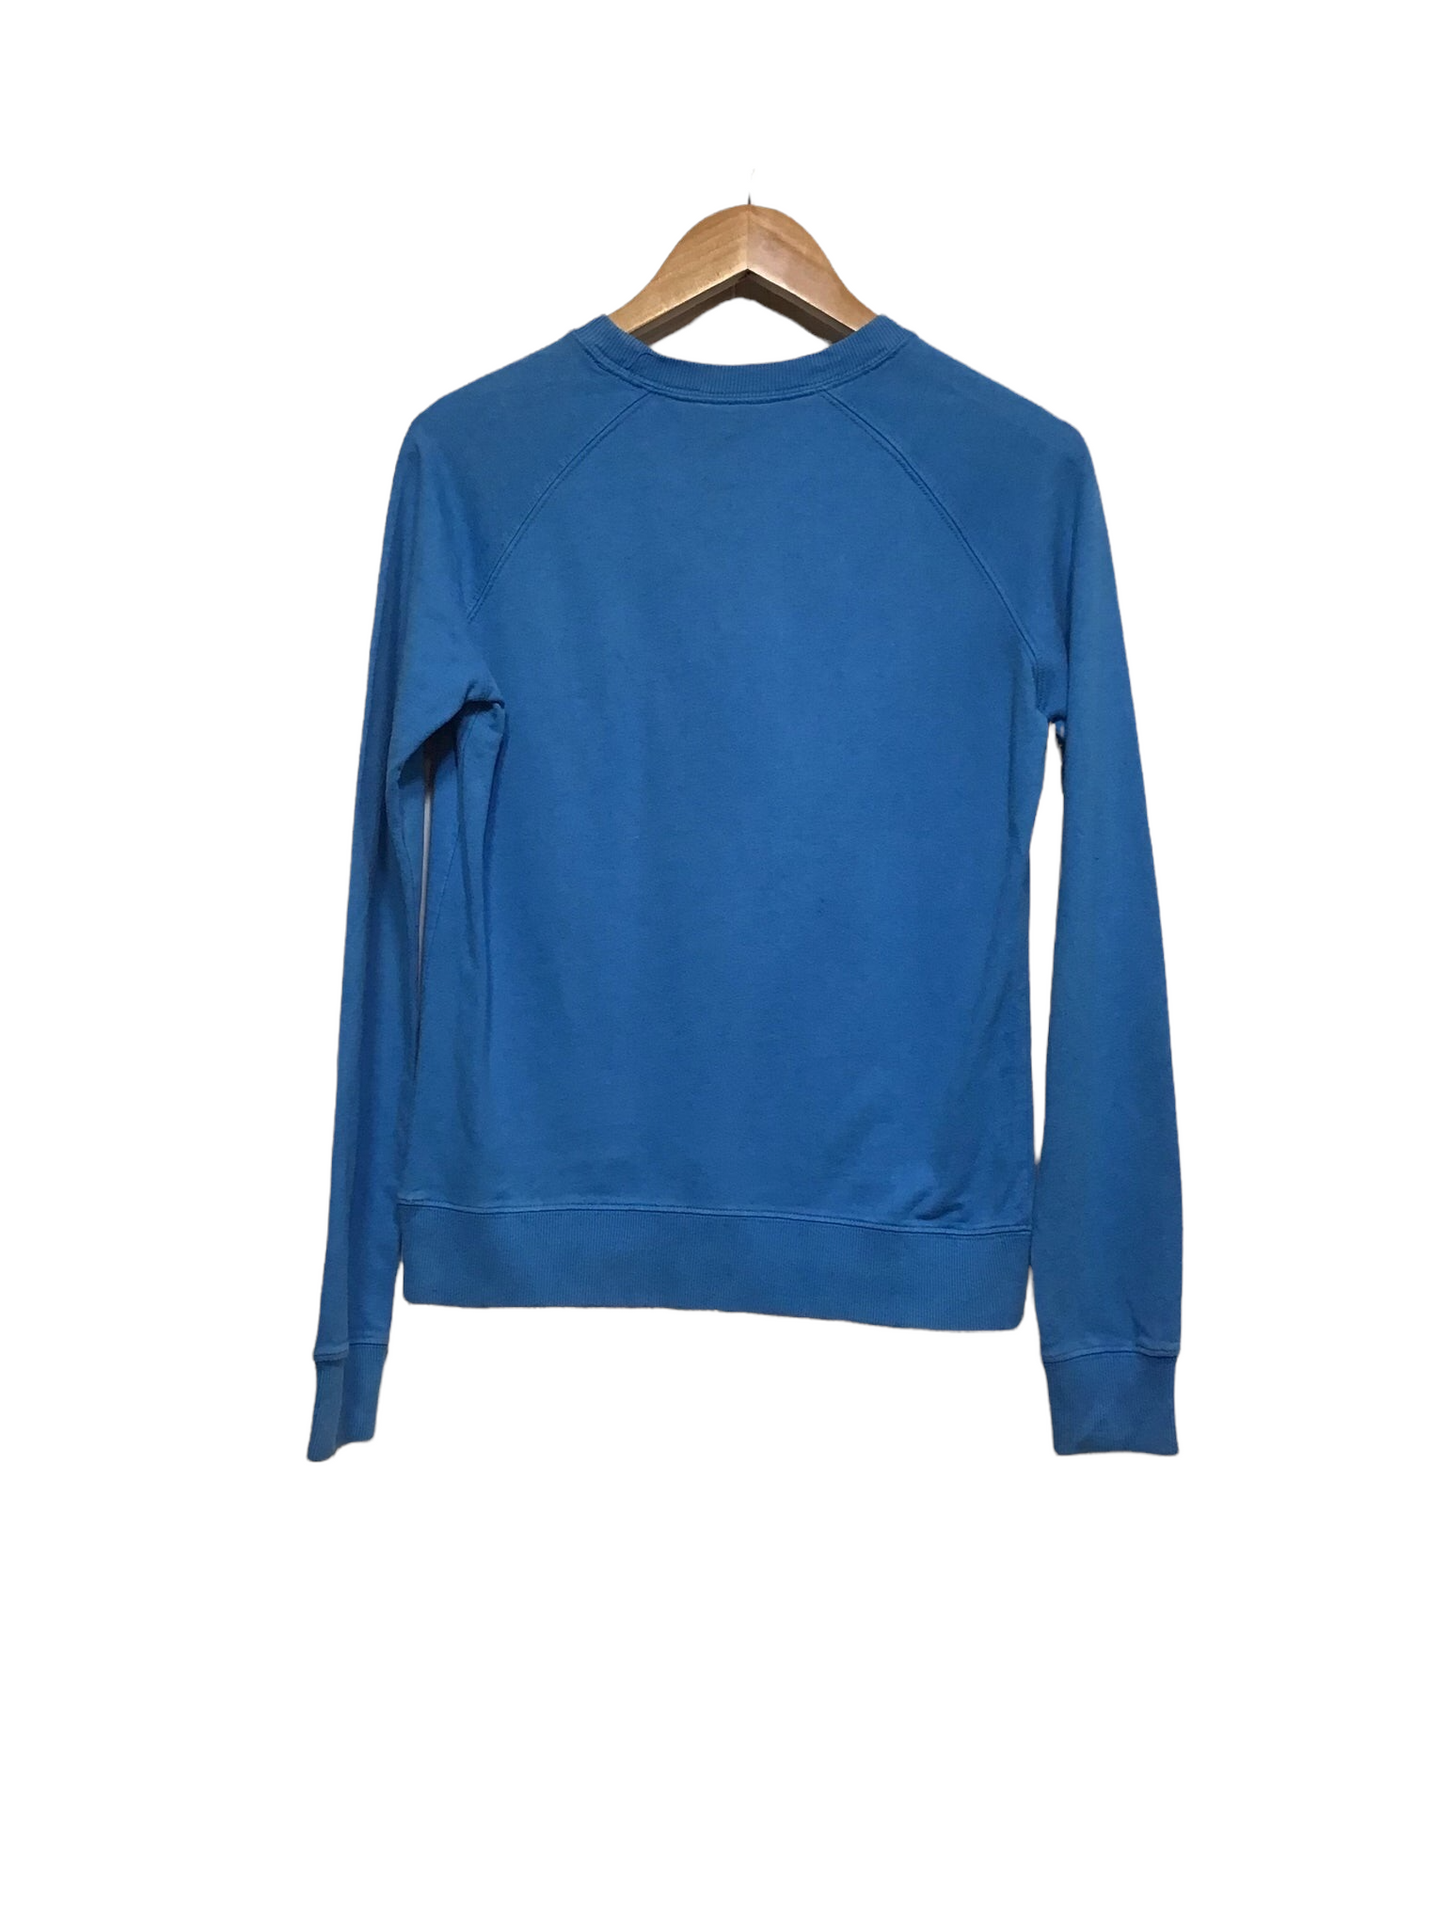 Tommy Hilfiger Sweatshirt (Size XS)